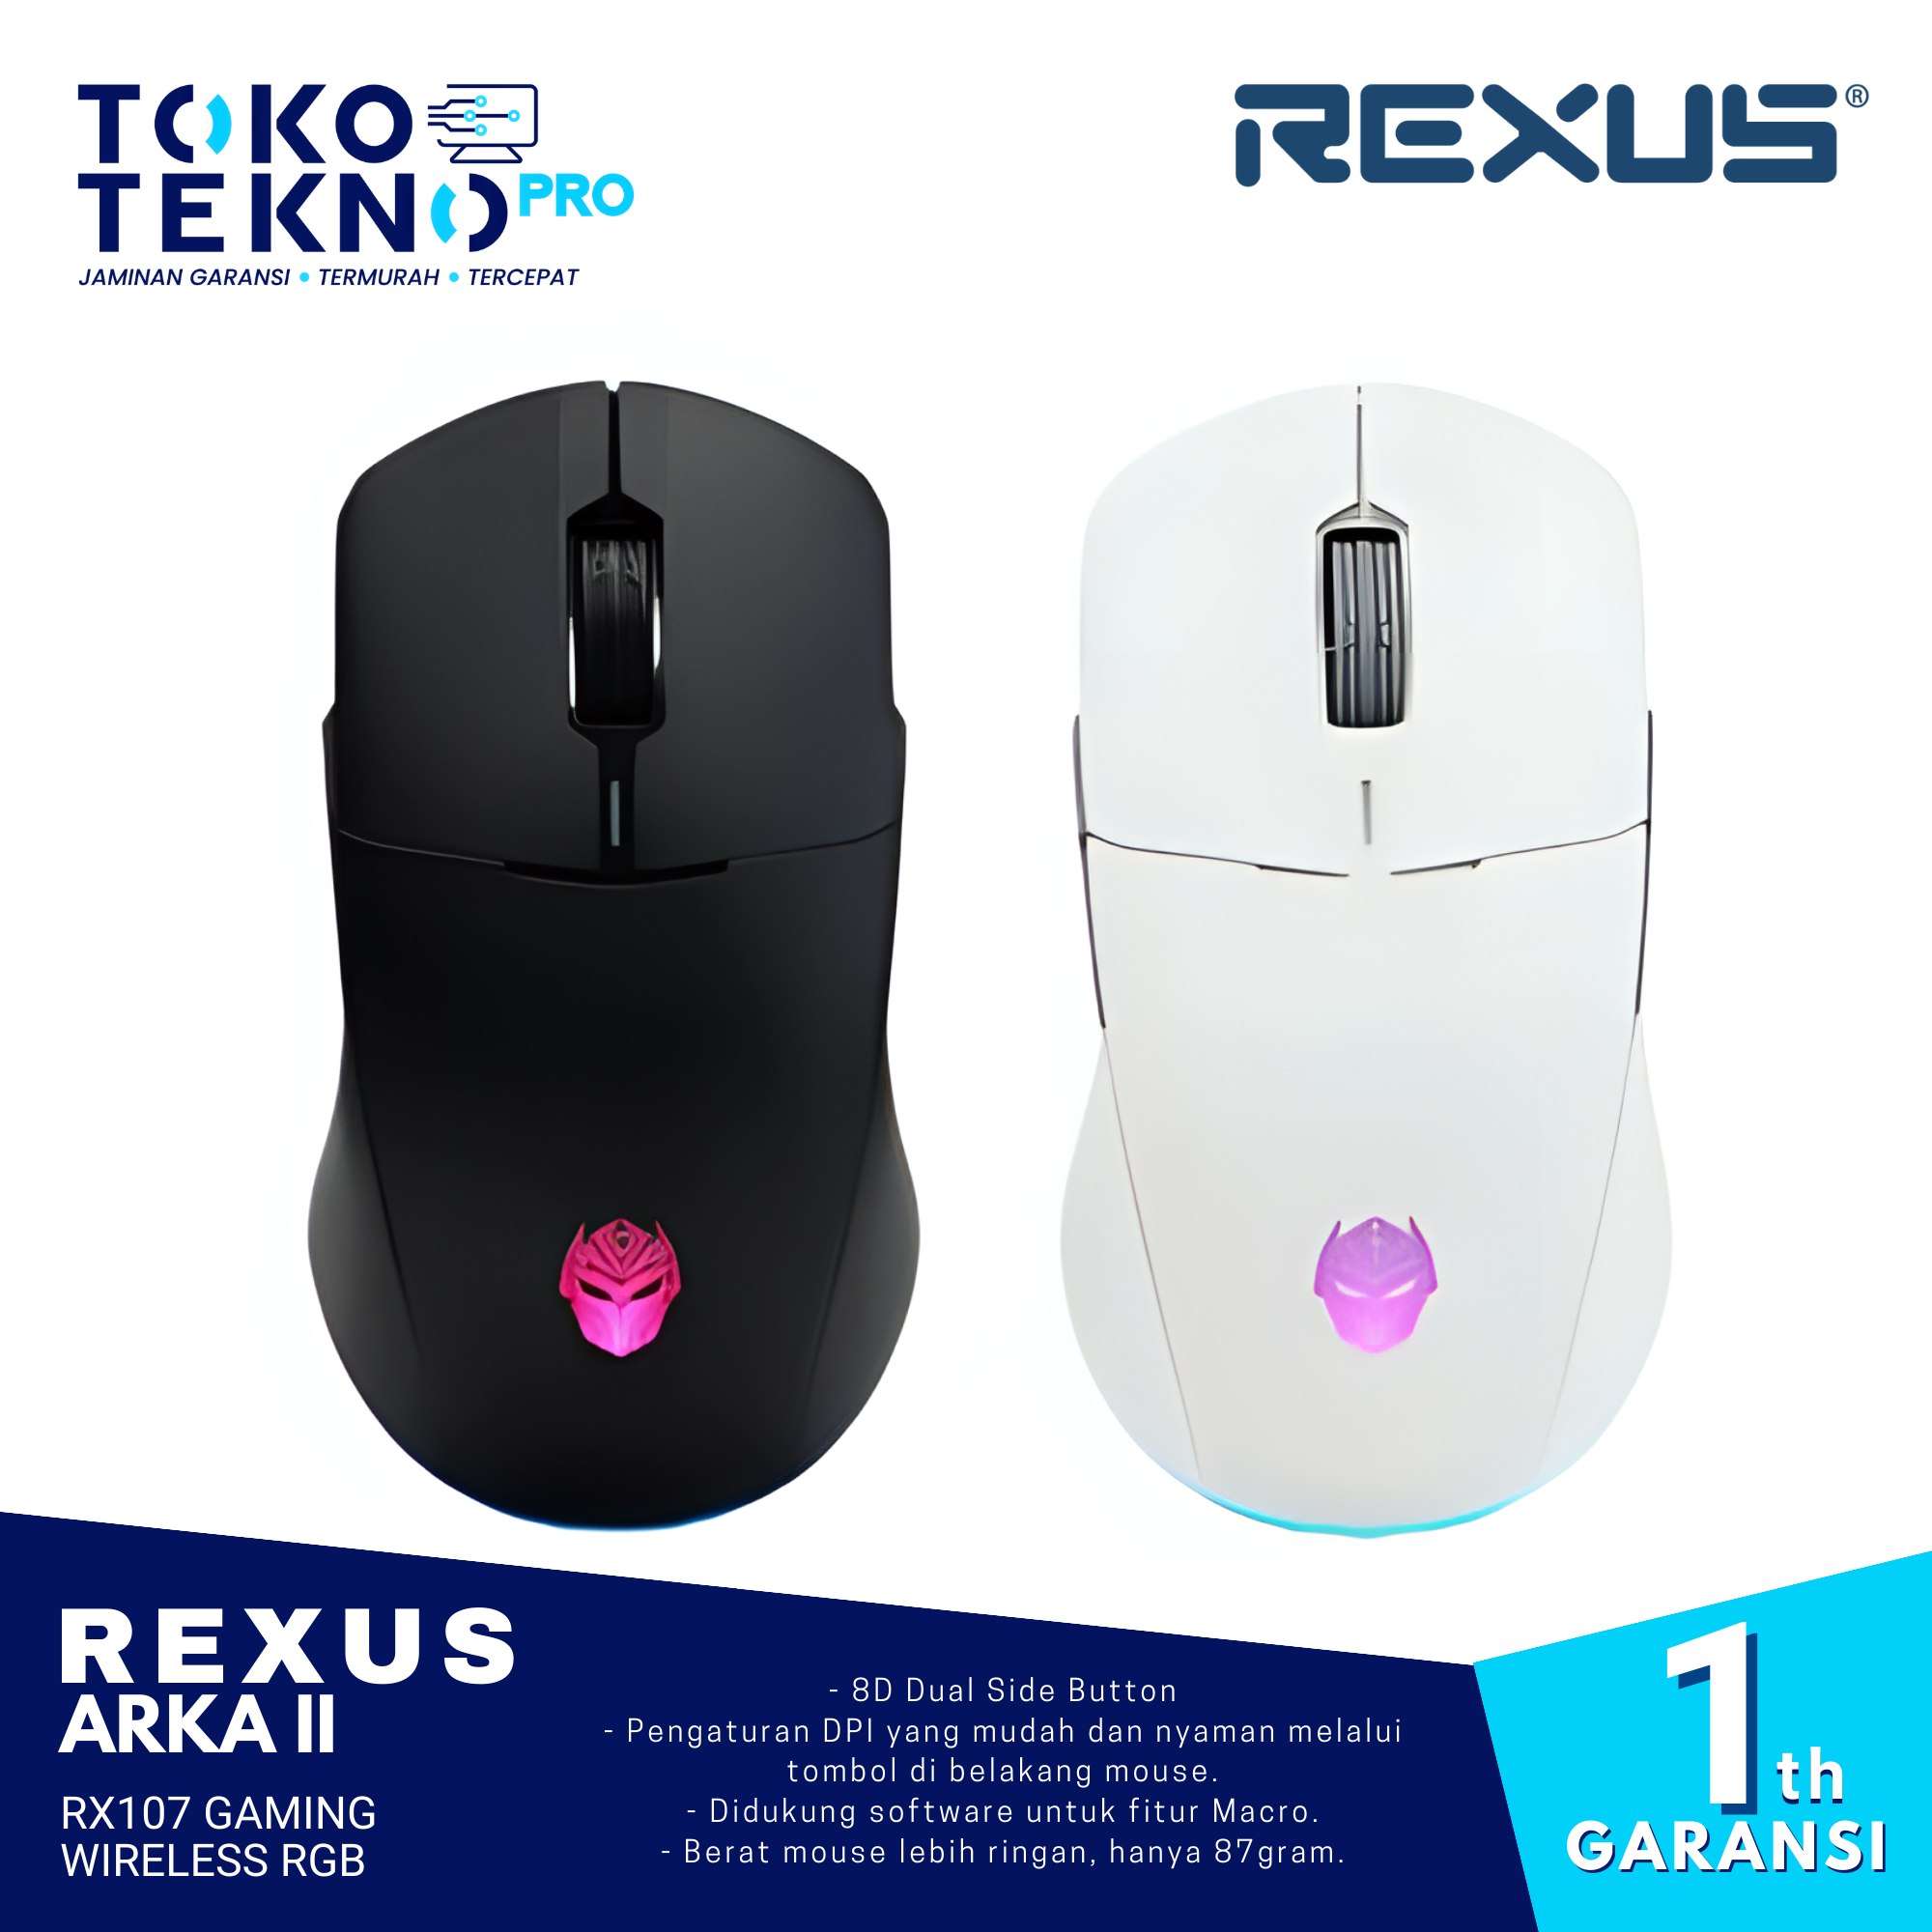 Rexus Arka II RX107 Gaming Wireless RGB